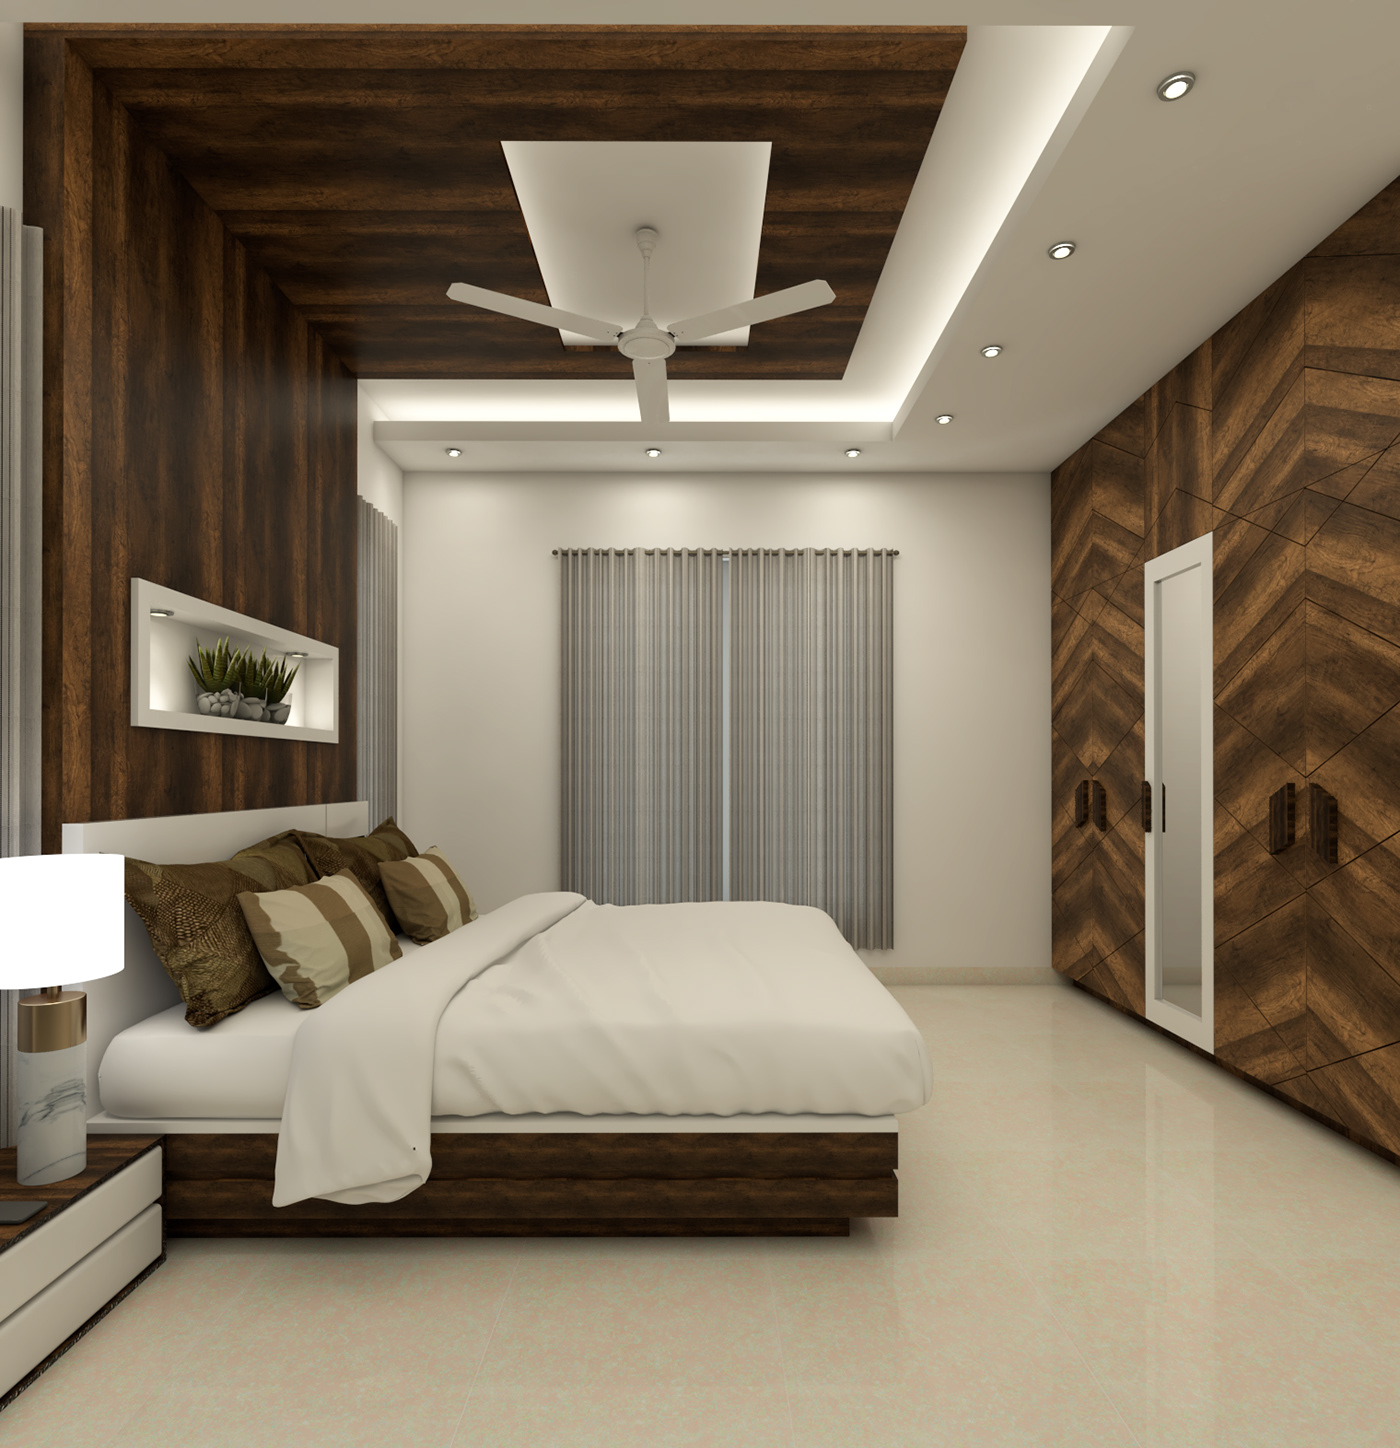 3D model architecture colour palette interior decor interior design  minimalist rendering SketchUP visualisation vray